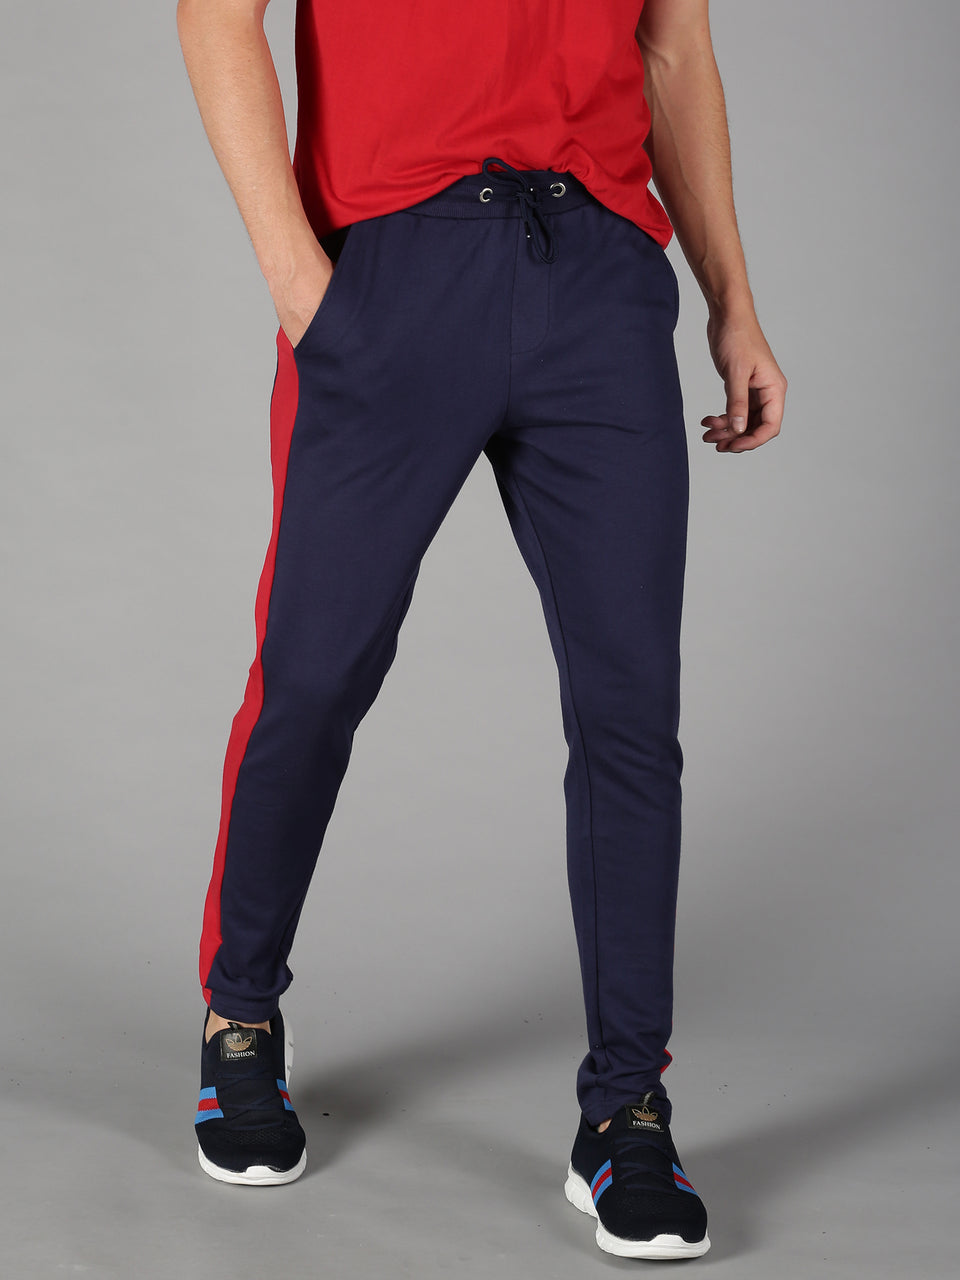 Buy Track Pants for Men at Great Price Online – VILAN APPARELS